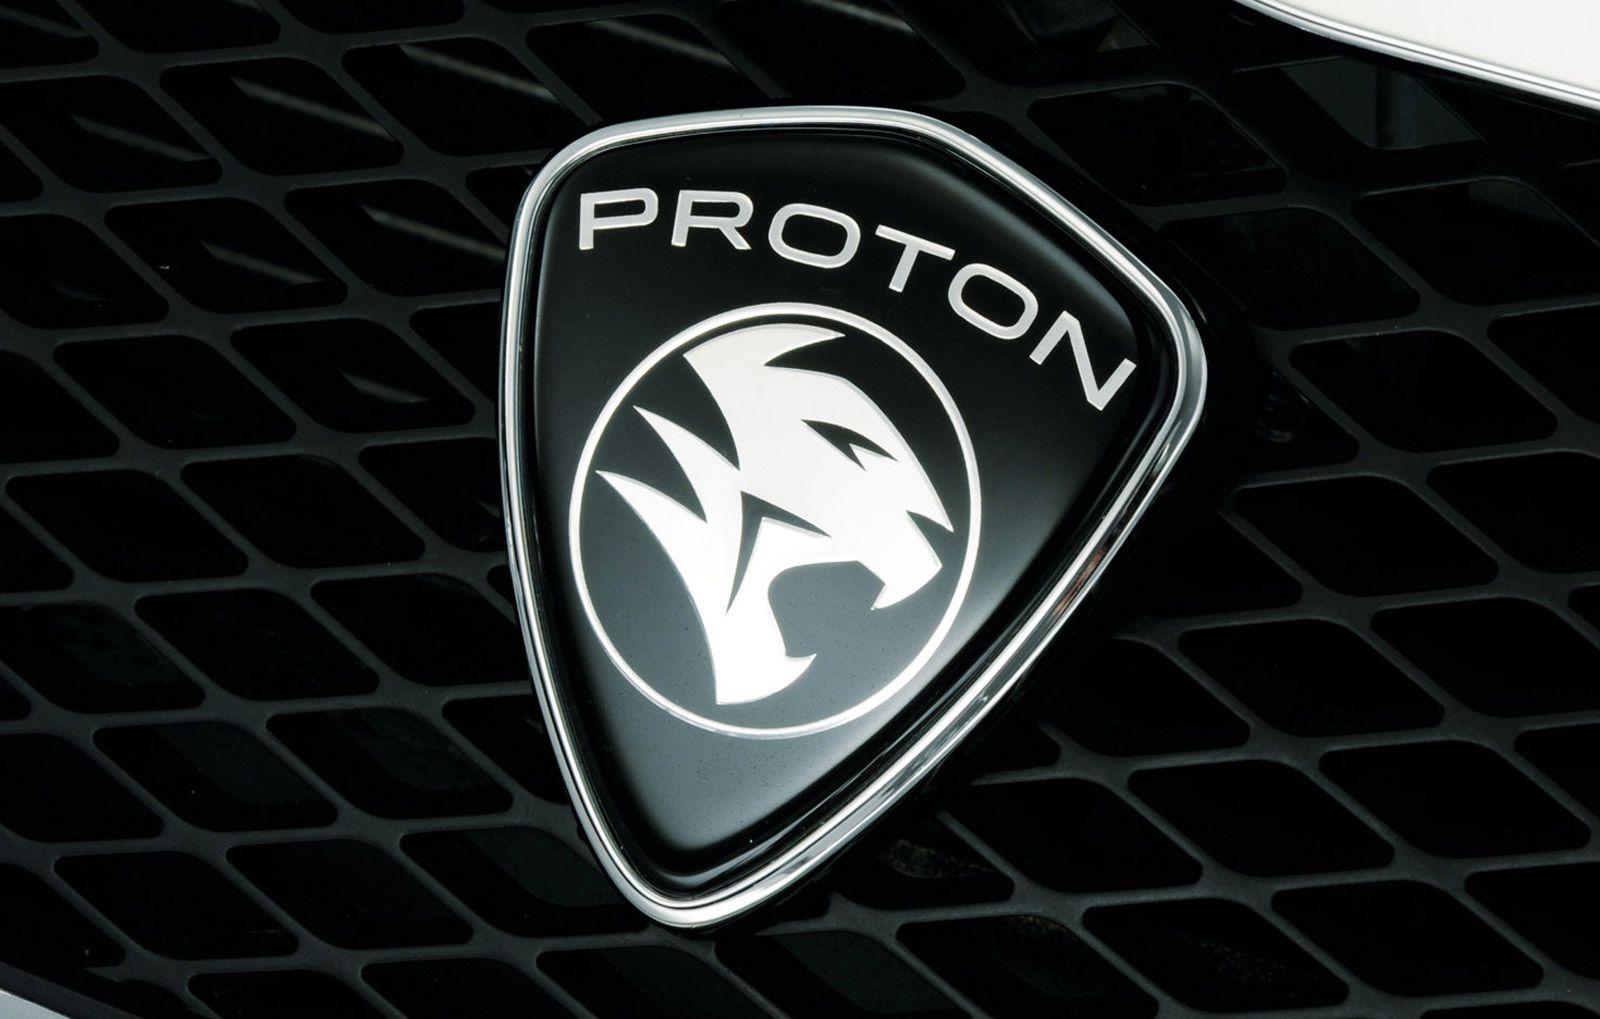 Malaysian Car Company Logo - Lotus parent company Proton sold to Malaysian conglomerate DRB-Hicom